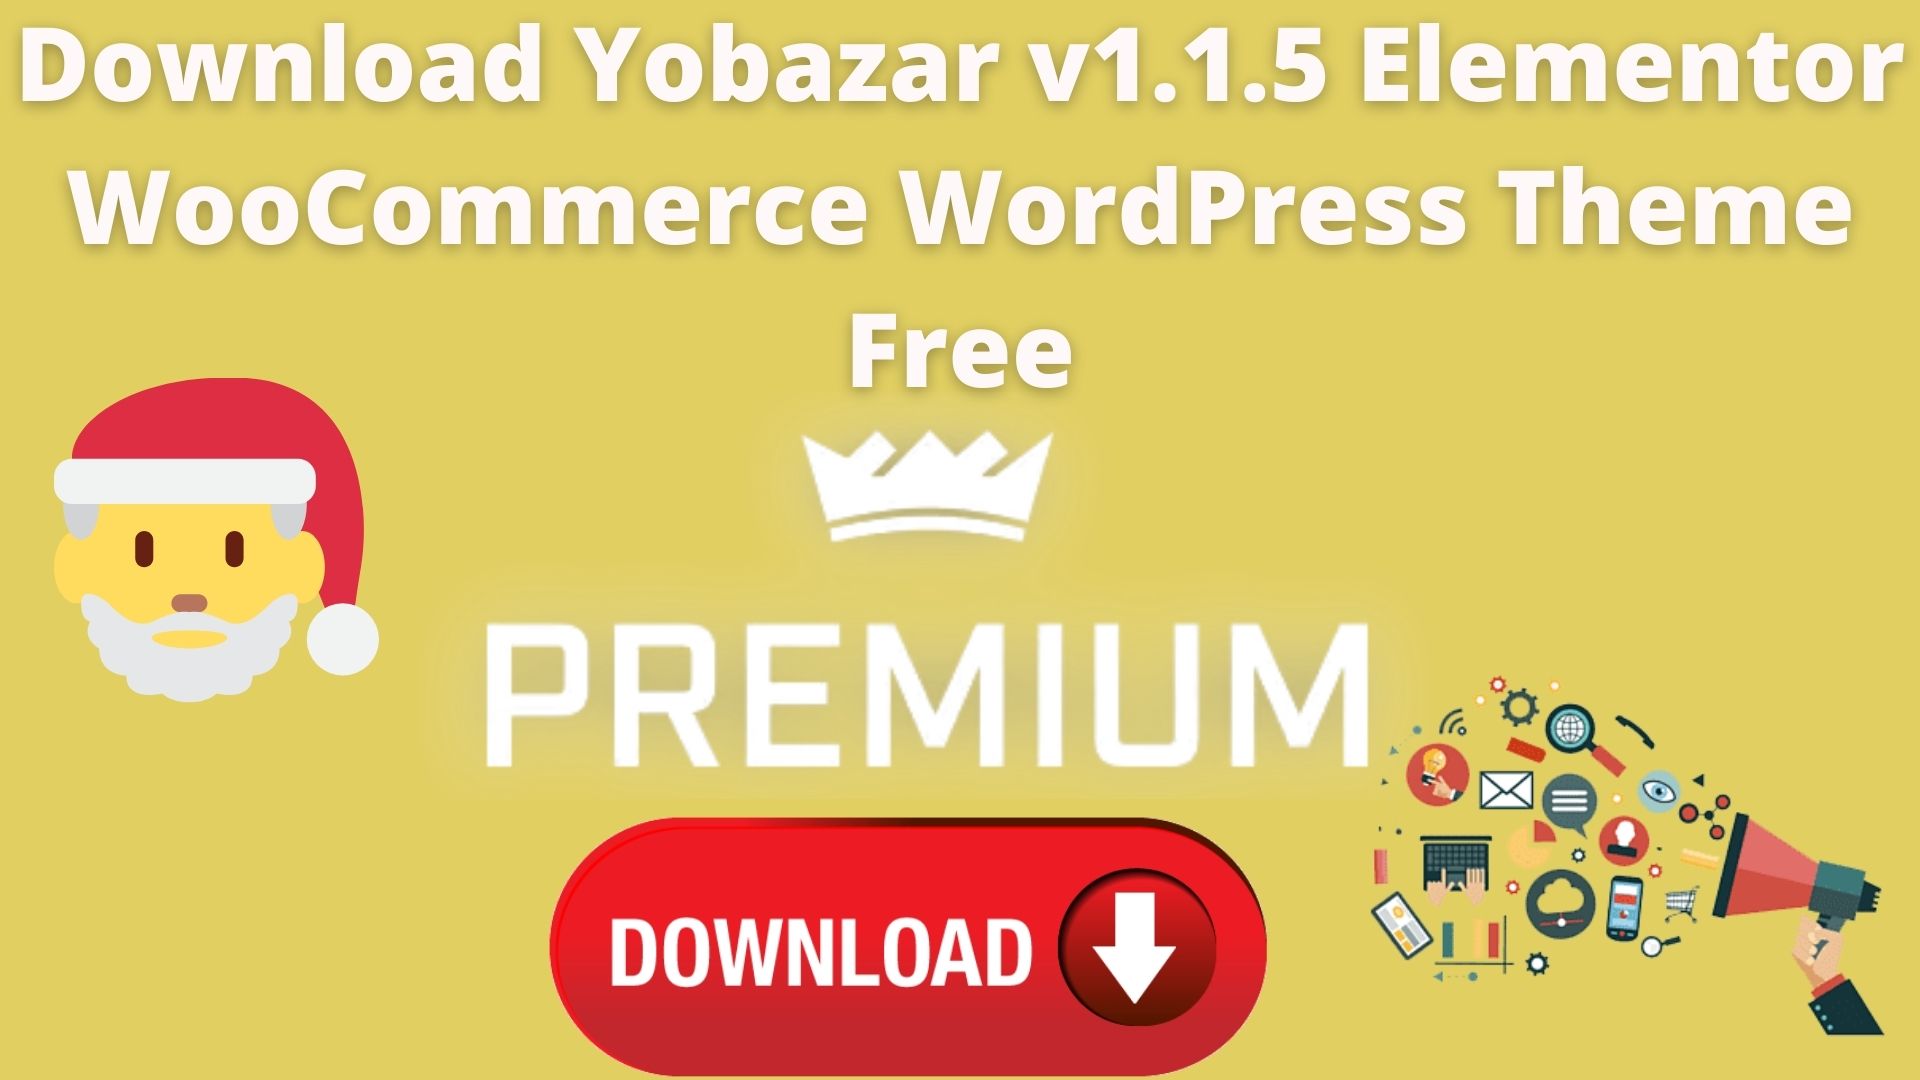 Download yobazar v1. 1. 5 elementor woocommerce wordpress theme free